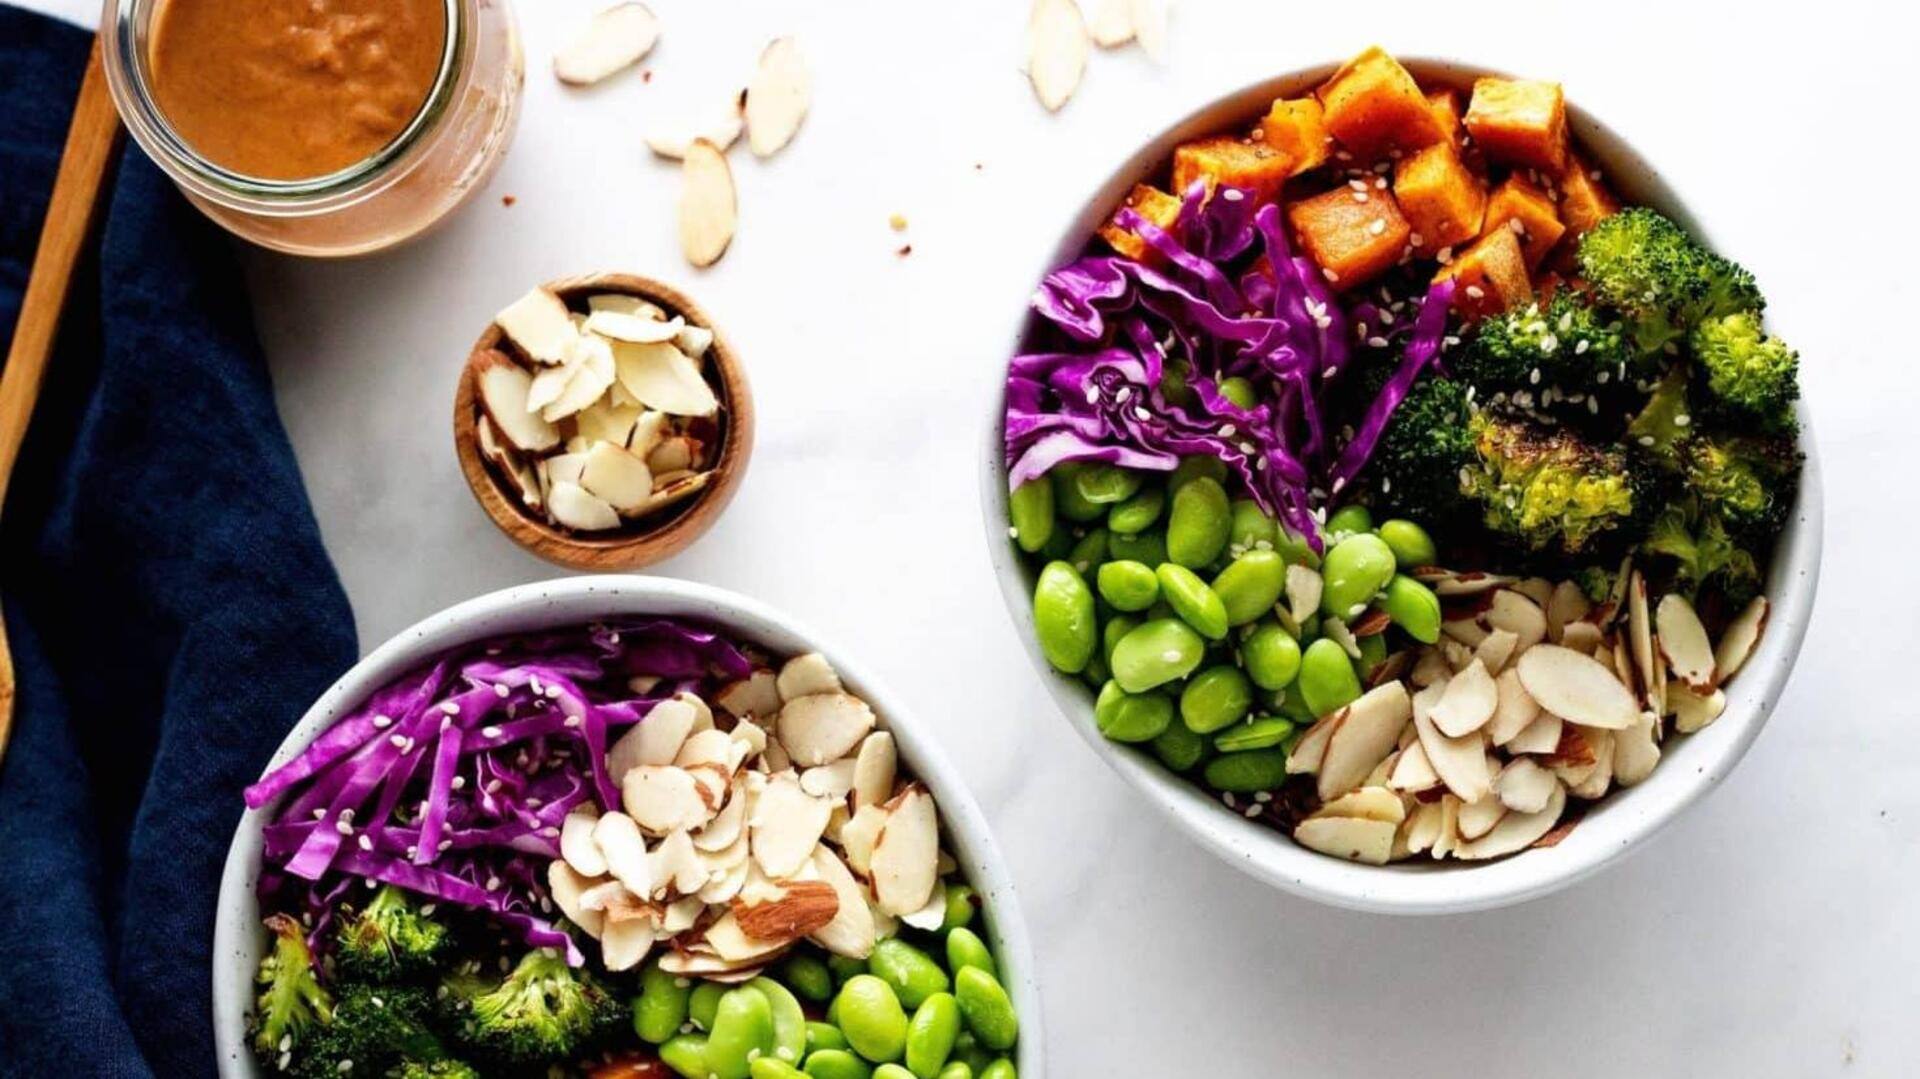 Here's how to make a satisfying vegan Buddha bowl